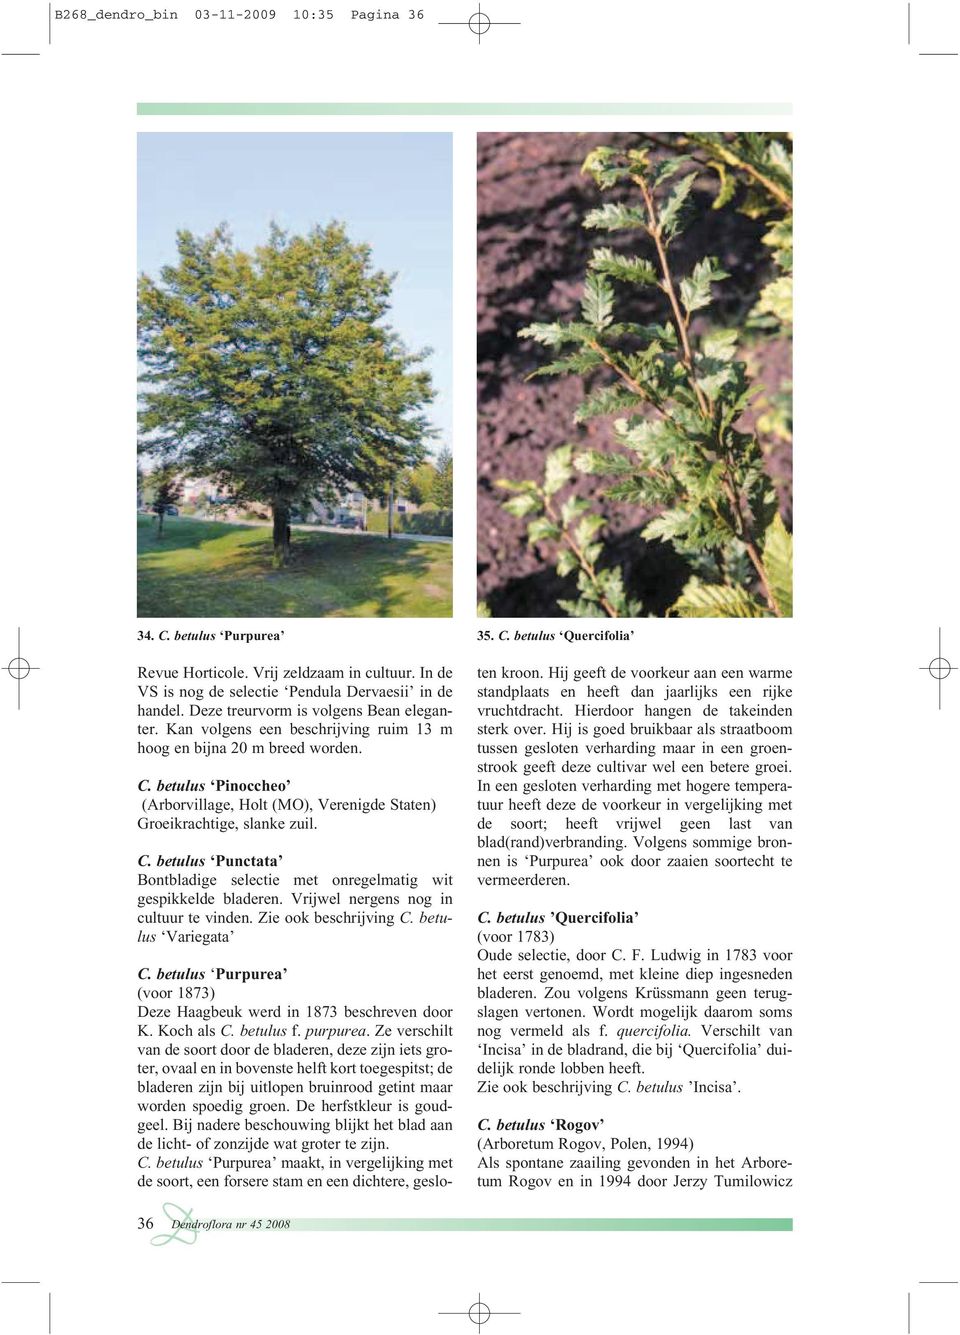 betulus Pinoccheo (Arborvillage, Holt (MO), Verenigde Staten) Groeikrachtige, slanke zuil. C. betulus Punctata Bontbladige selectie met onregelmatig wit gespikkelde bladeren.